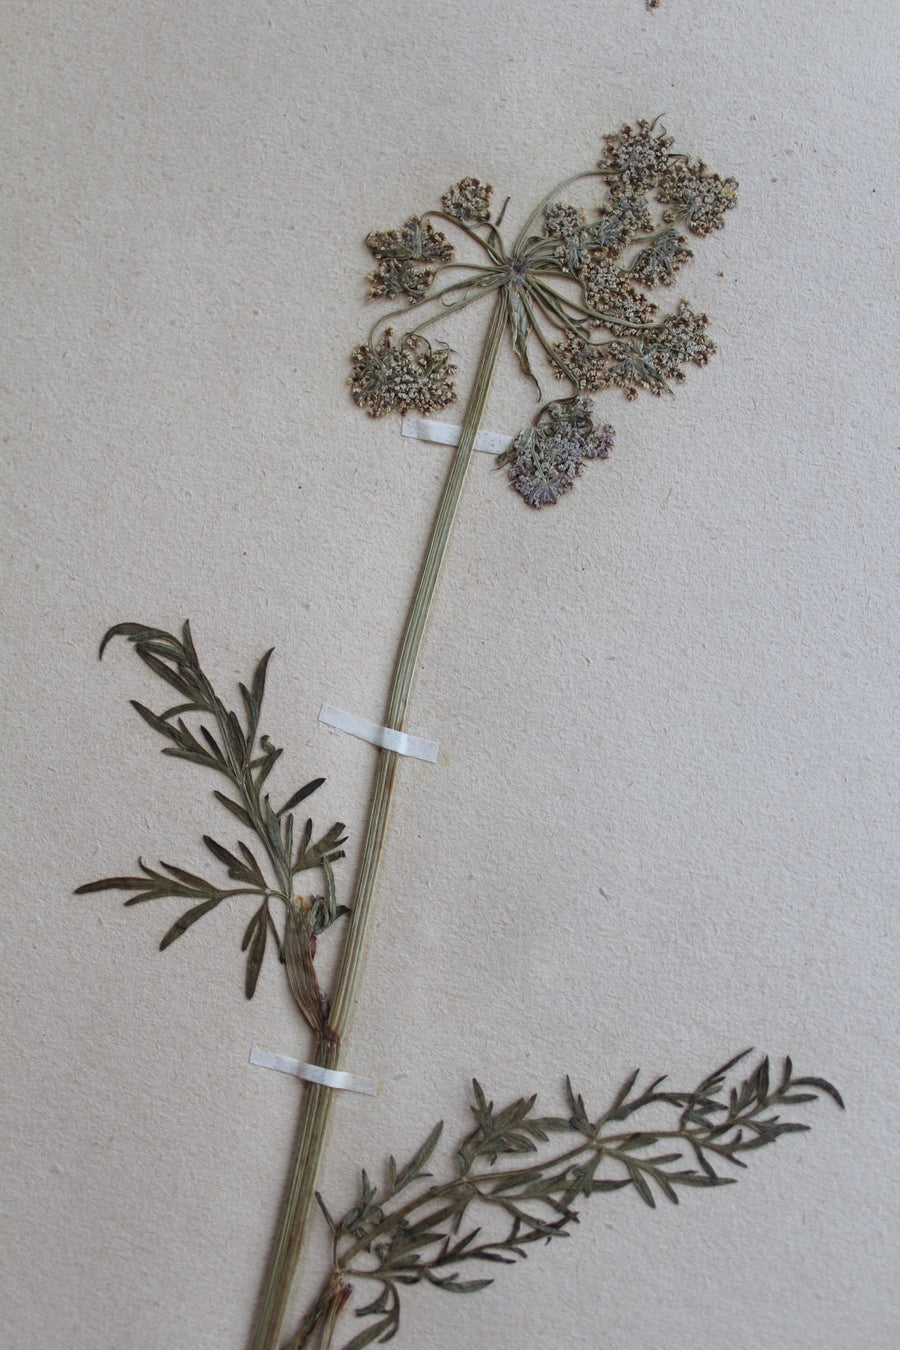 1930s Swedish Herbarium Specimen - Milk Parsley